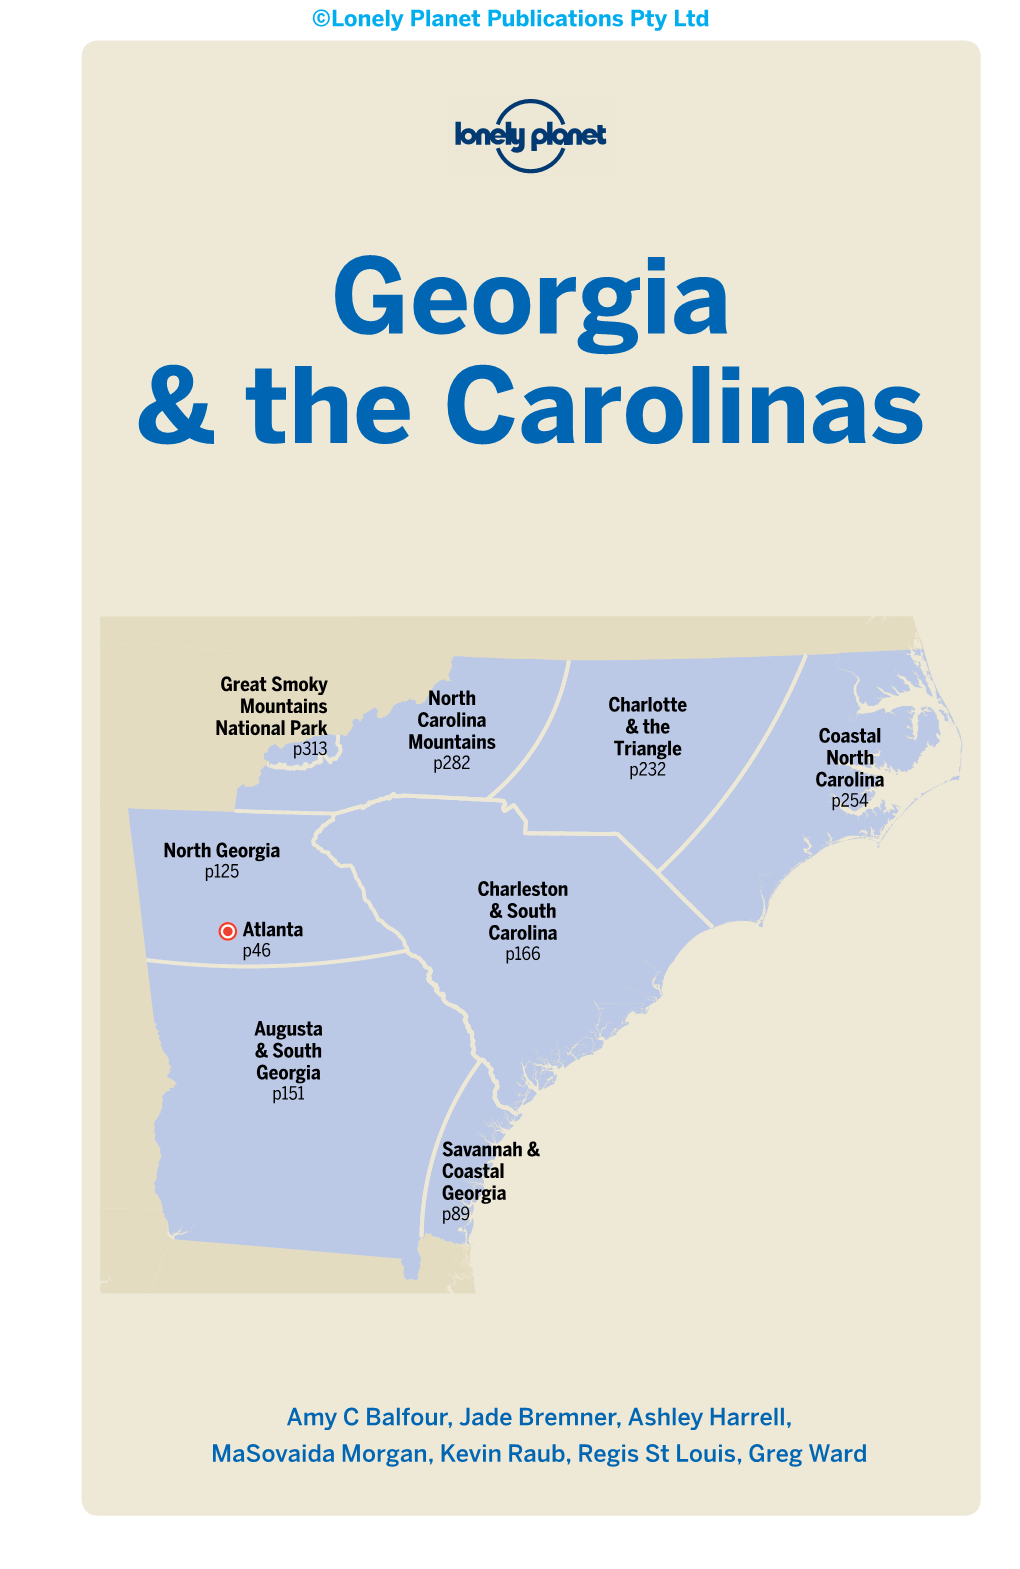 Georgia & the Carolinas 2